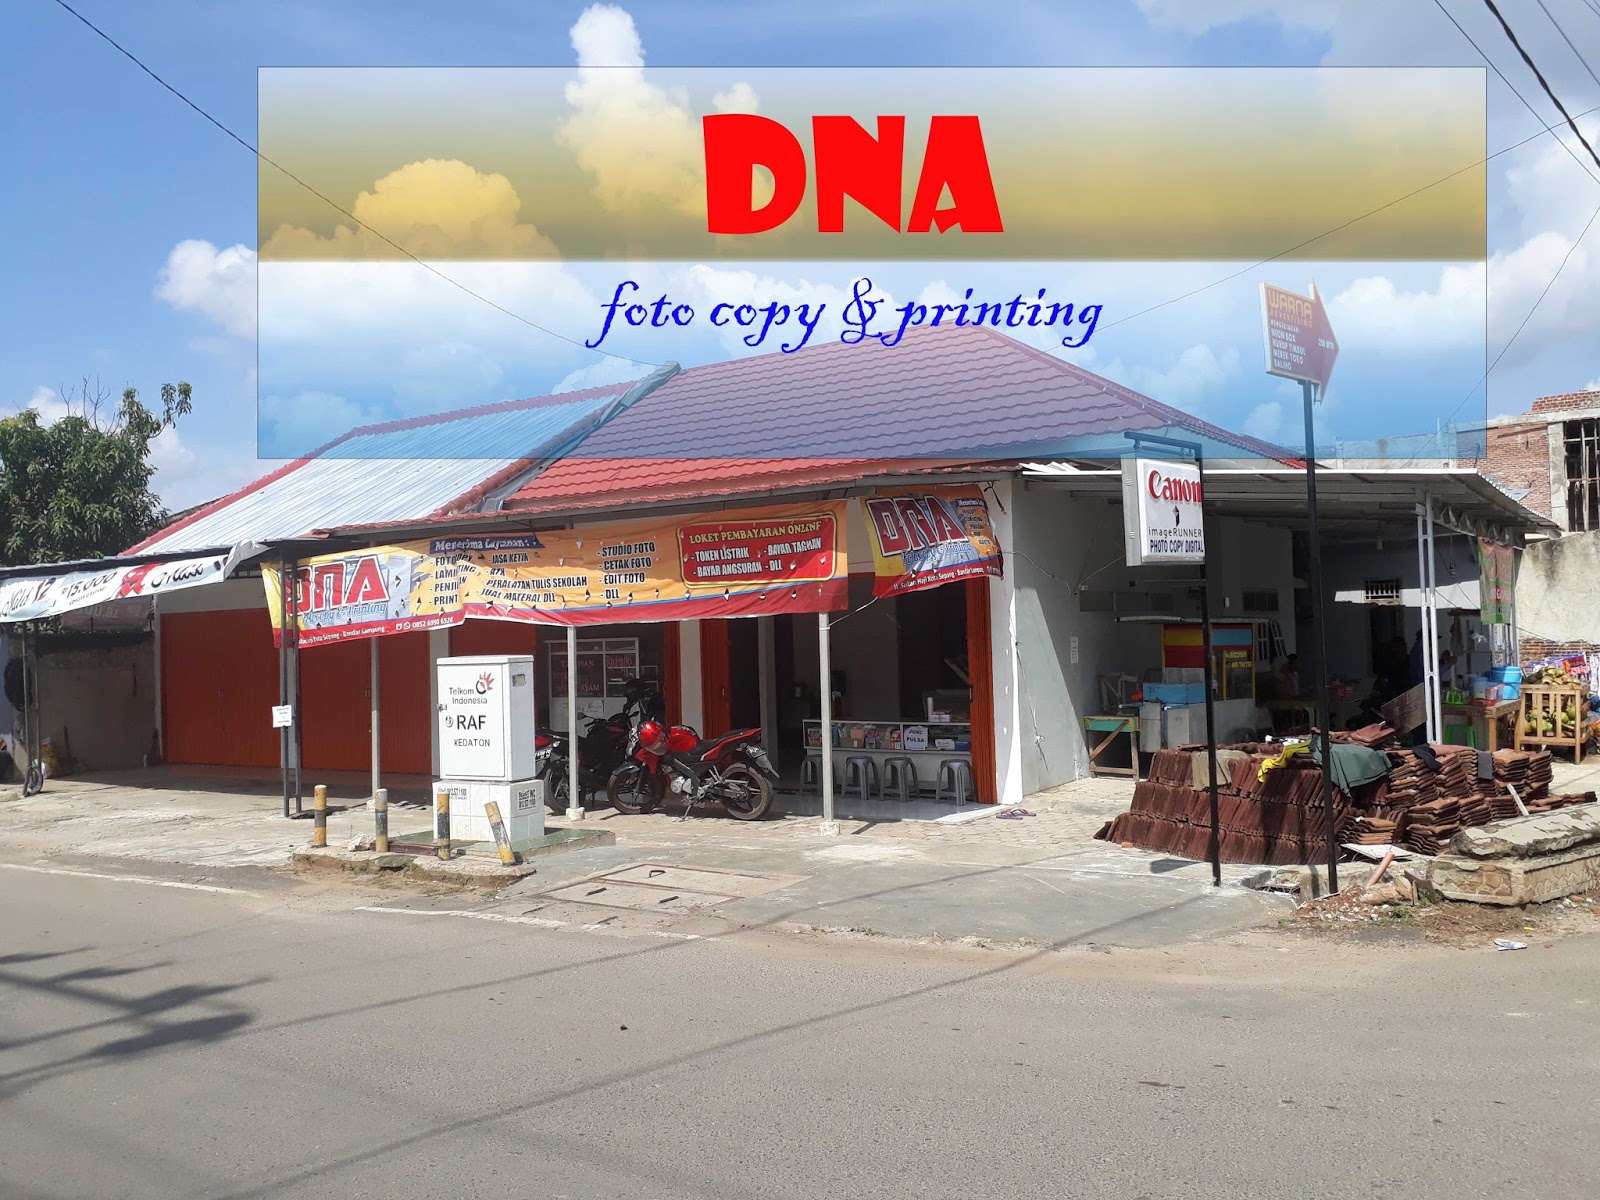 Lowongan Kerja DNA Fotocopy & Printing Lampung